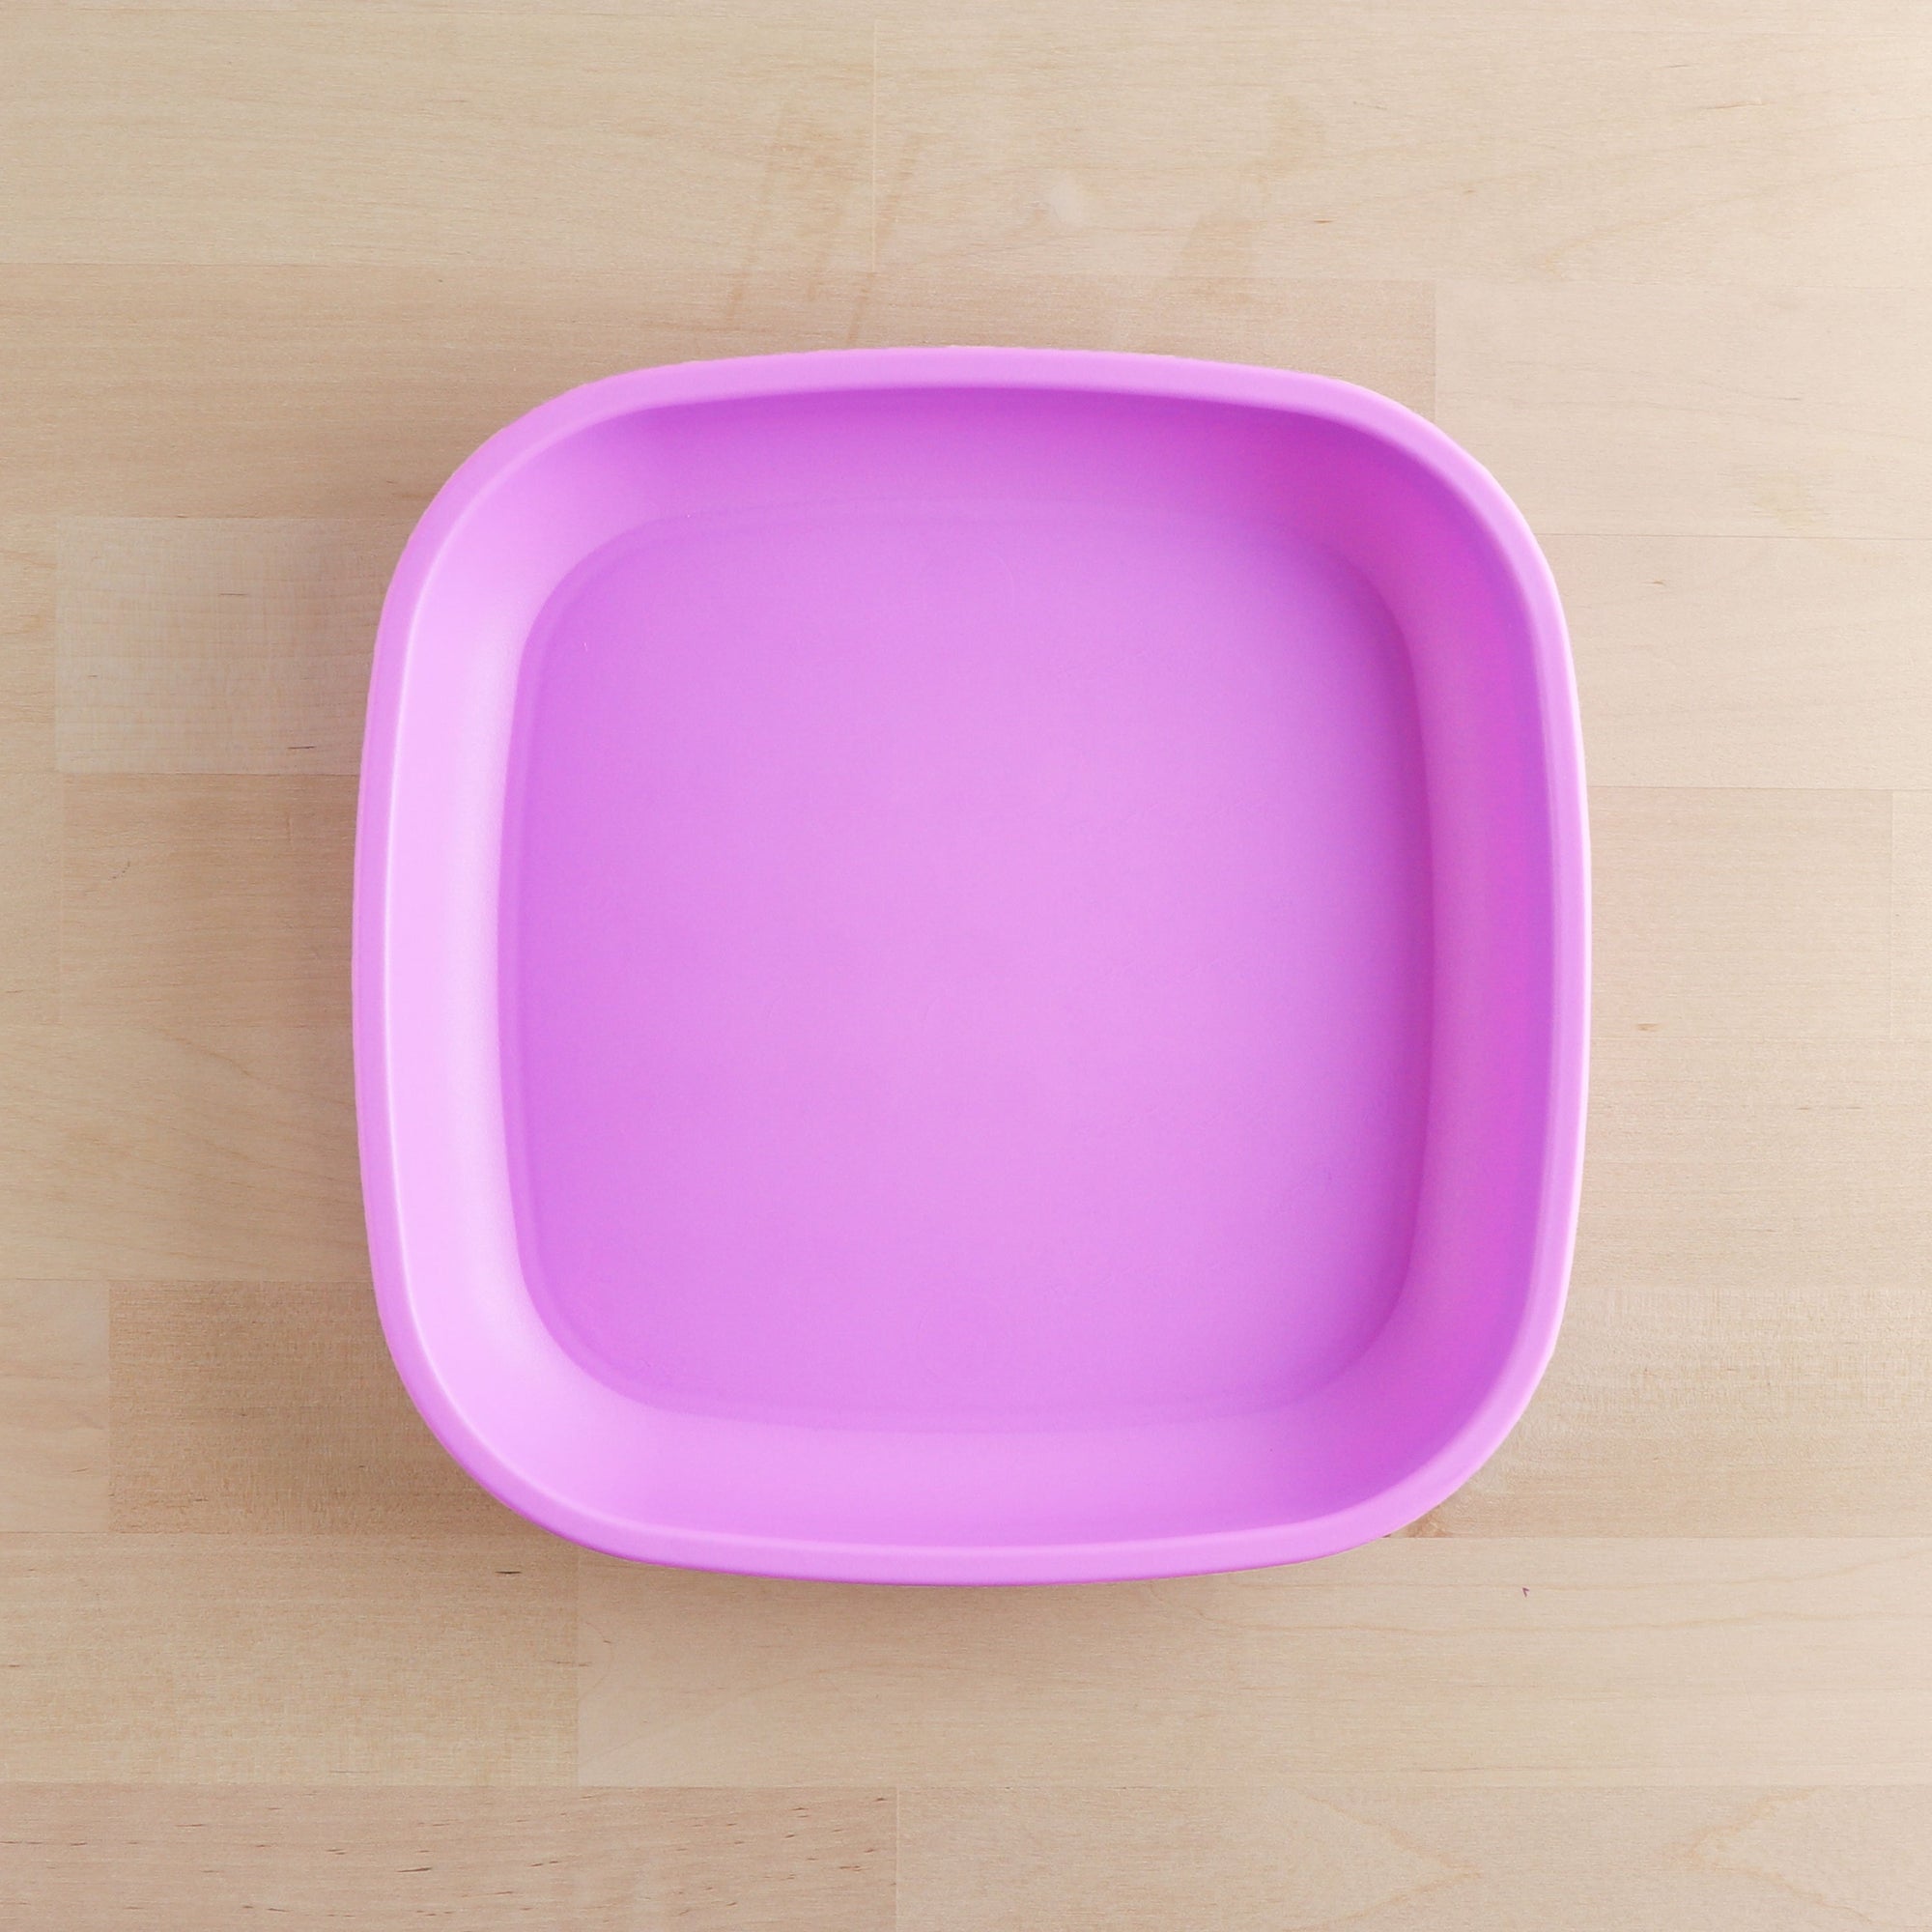 Flat Plate (Purple)